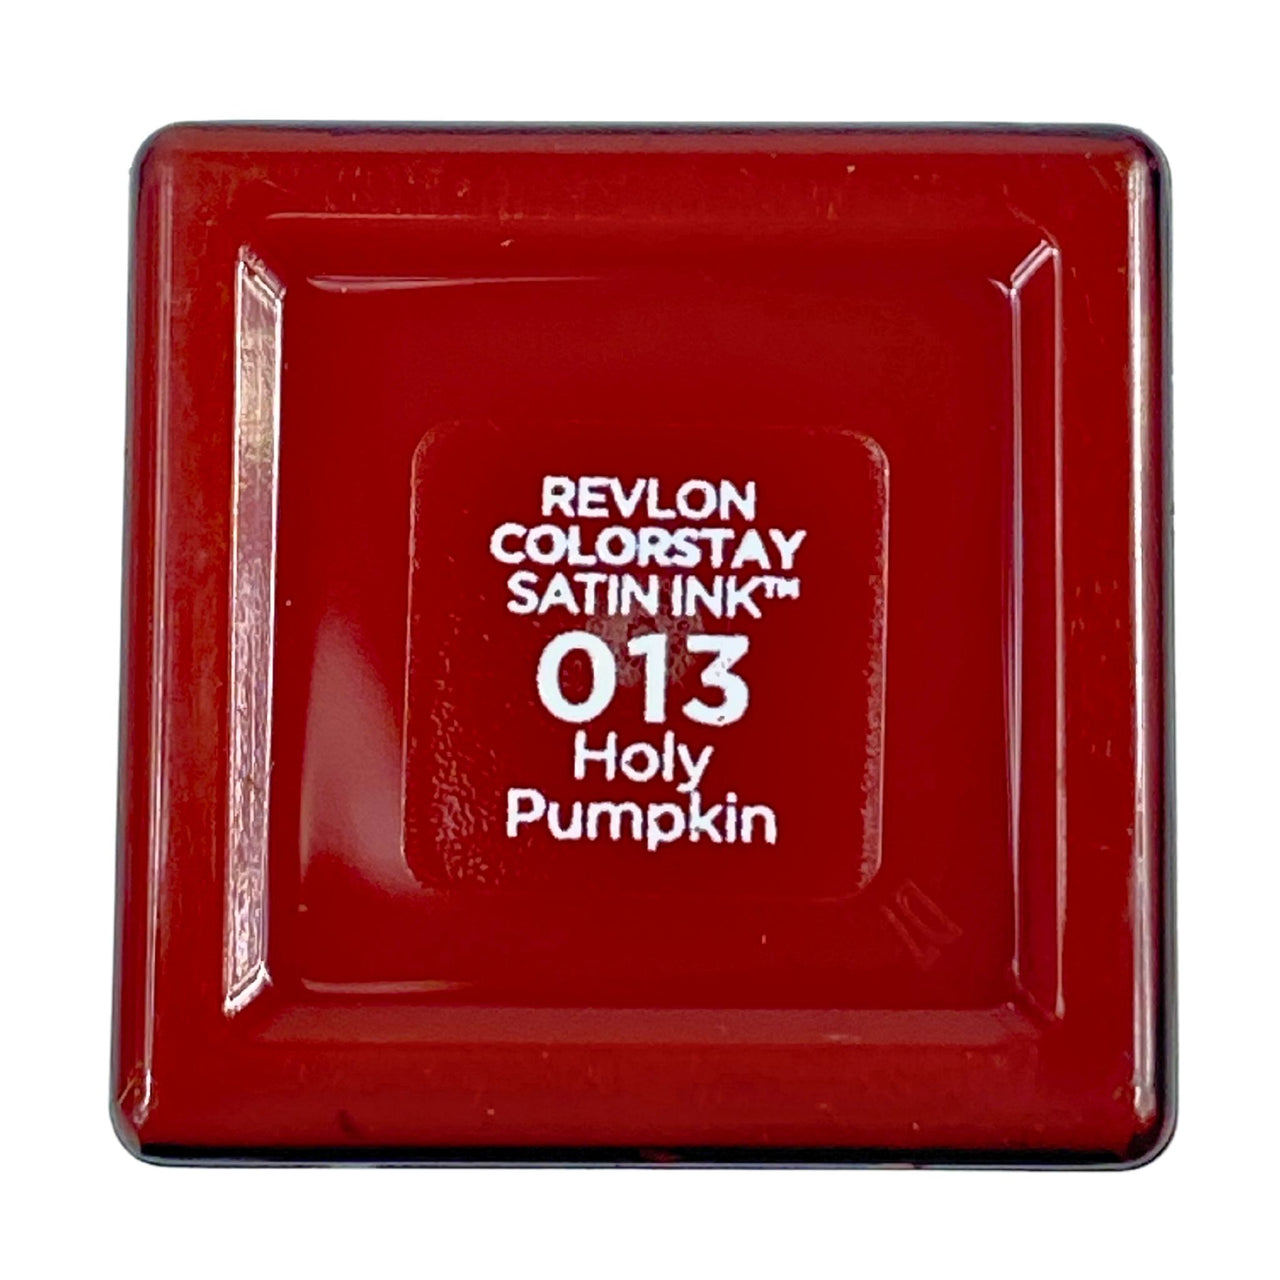 Revlon Colorstay Satin Ink 013 Holy Pumpkin  